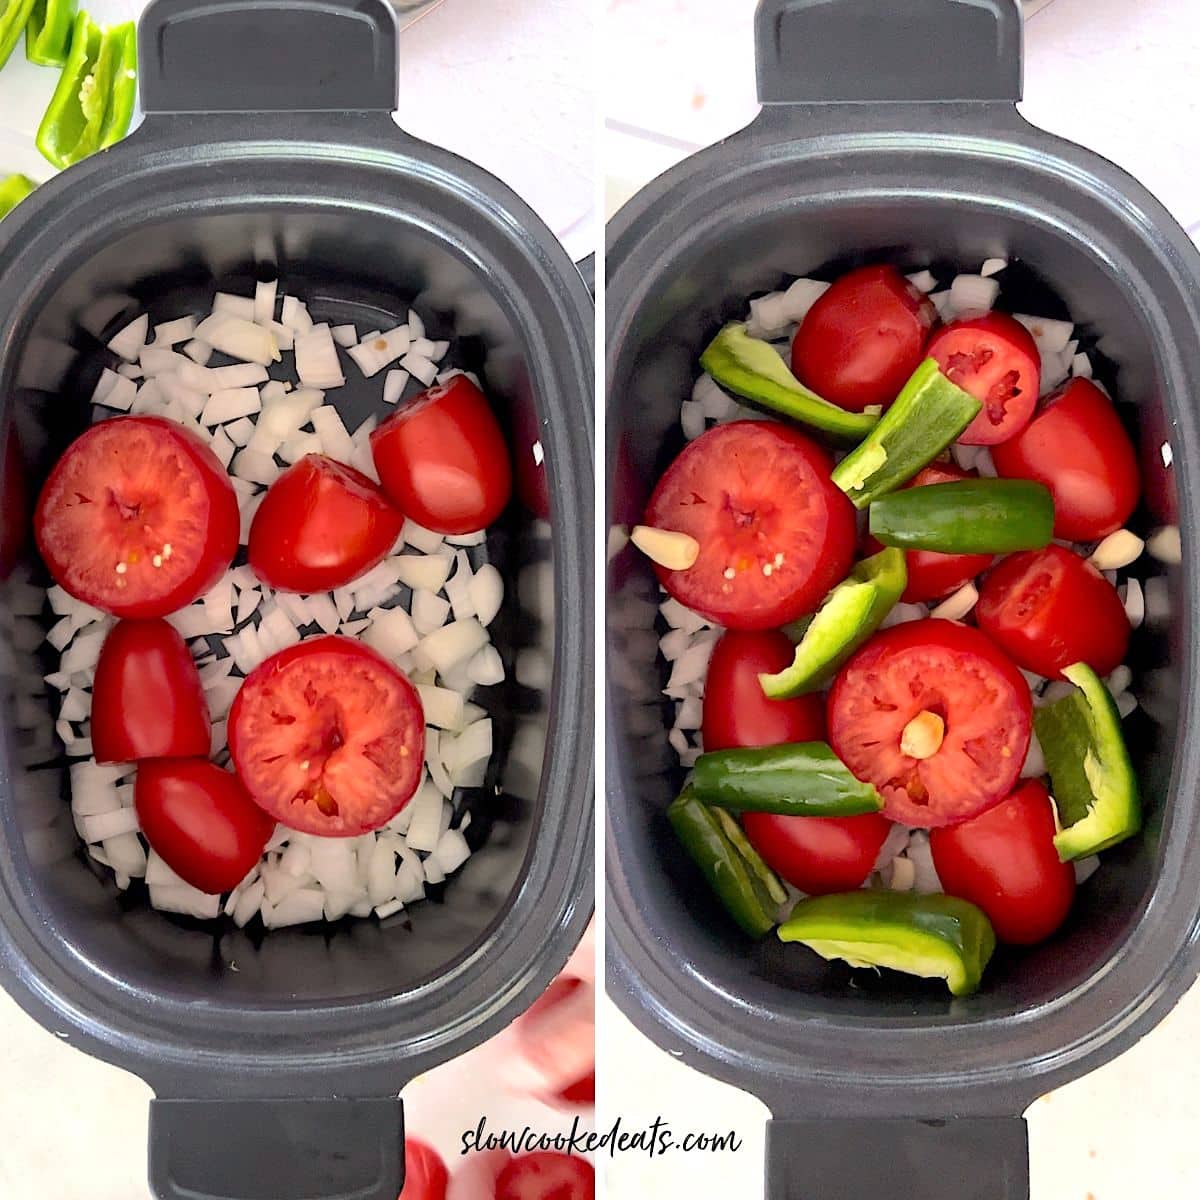 Adding all the salsa vegetables into a black oval crock pot.